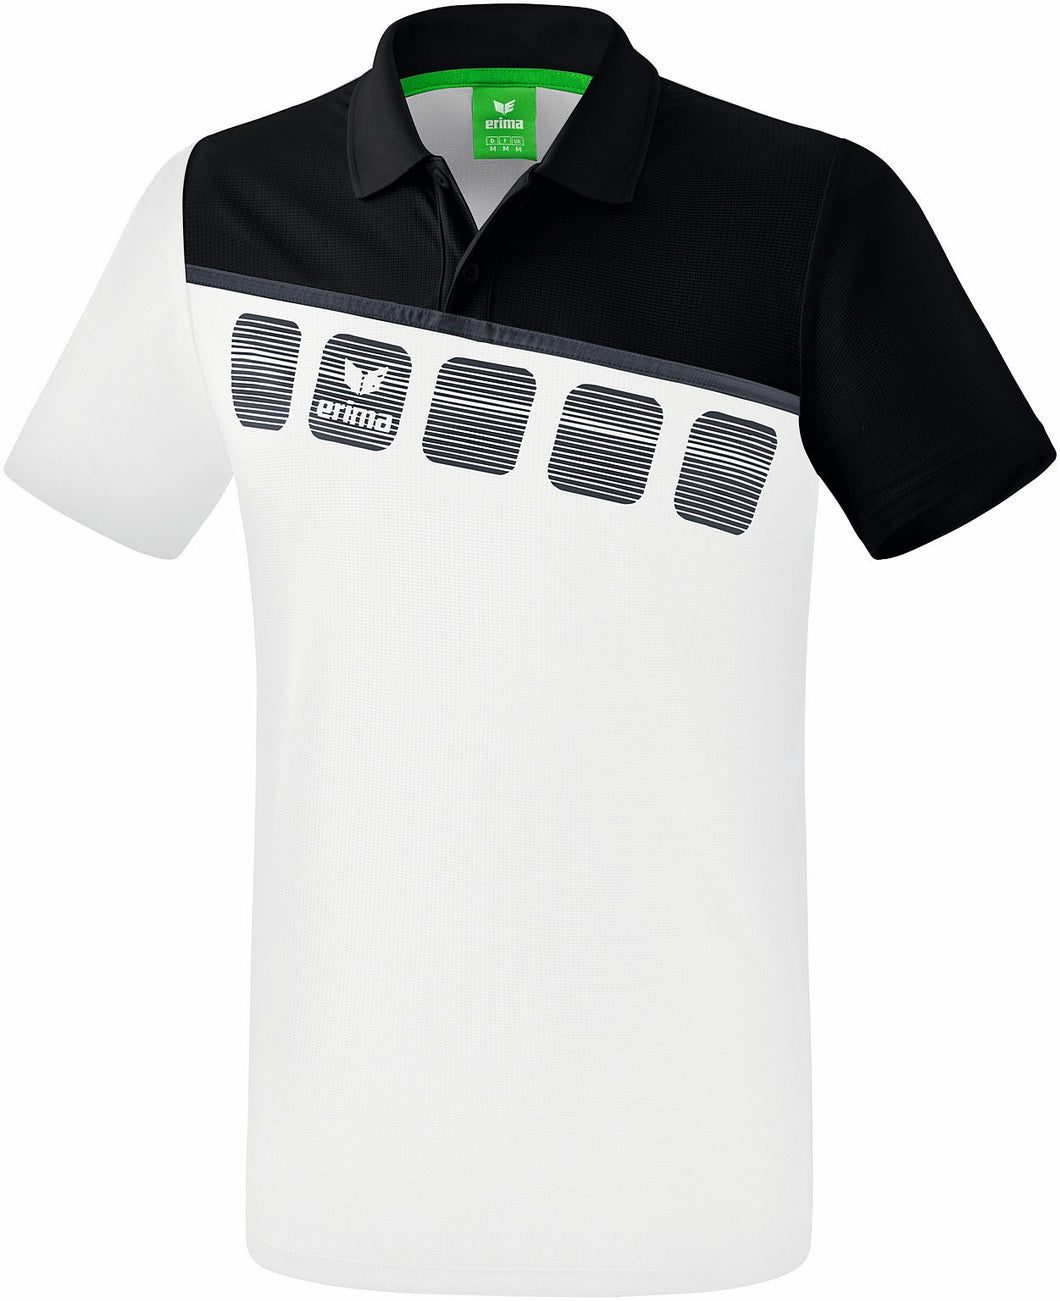 Teamline 5-C polo-shirt